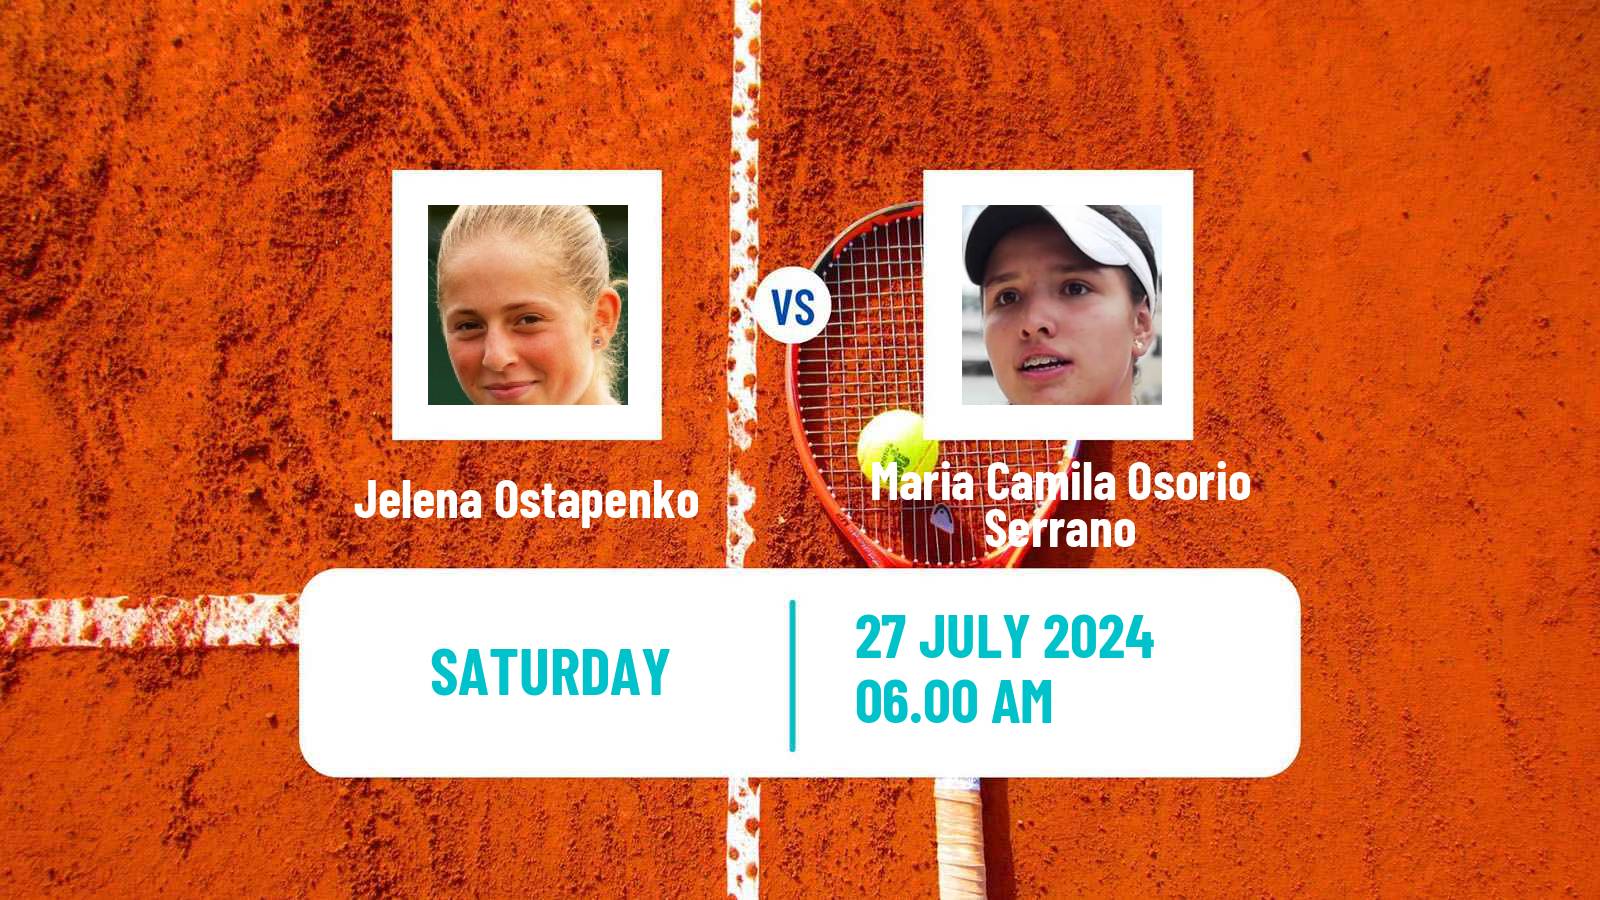 Tennis WTA Olympic Games Jelena Ostapenko - Maria Camila Osorio Serrano